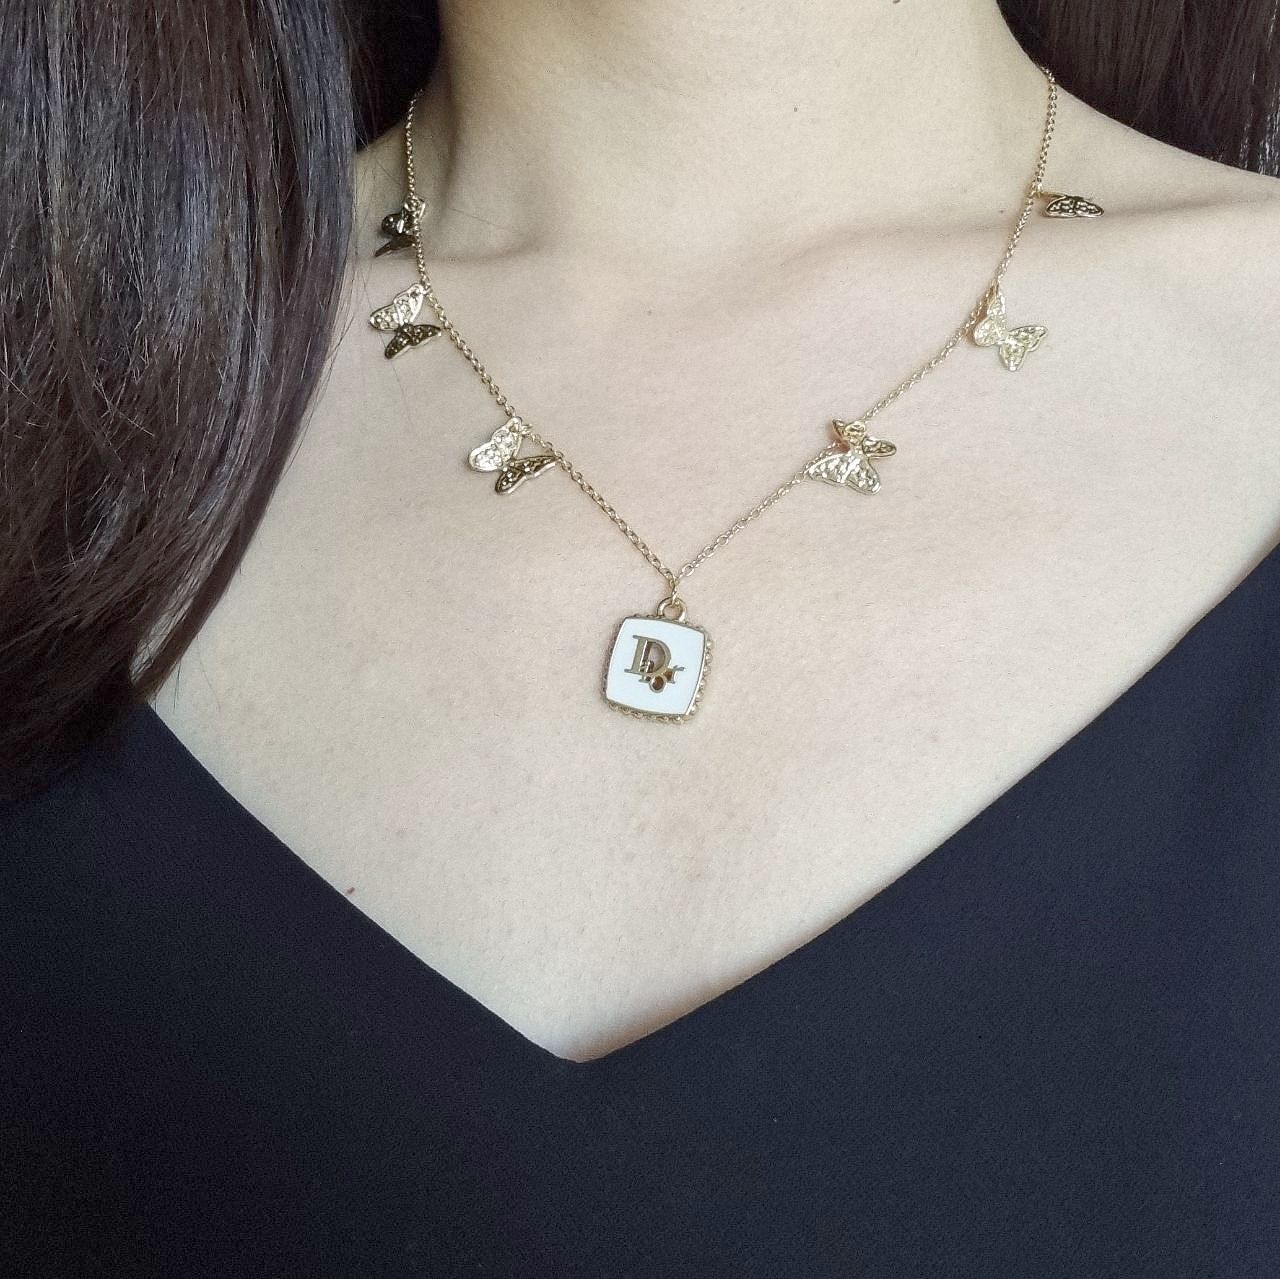 Dior White x Gold Necklace